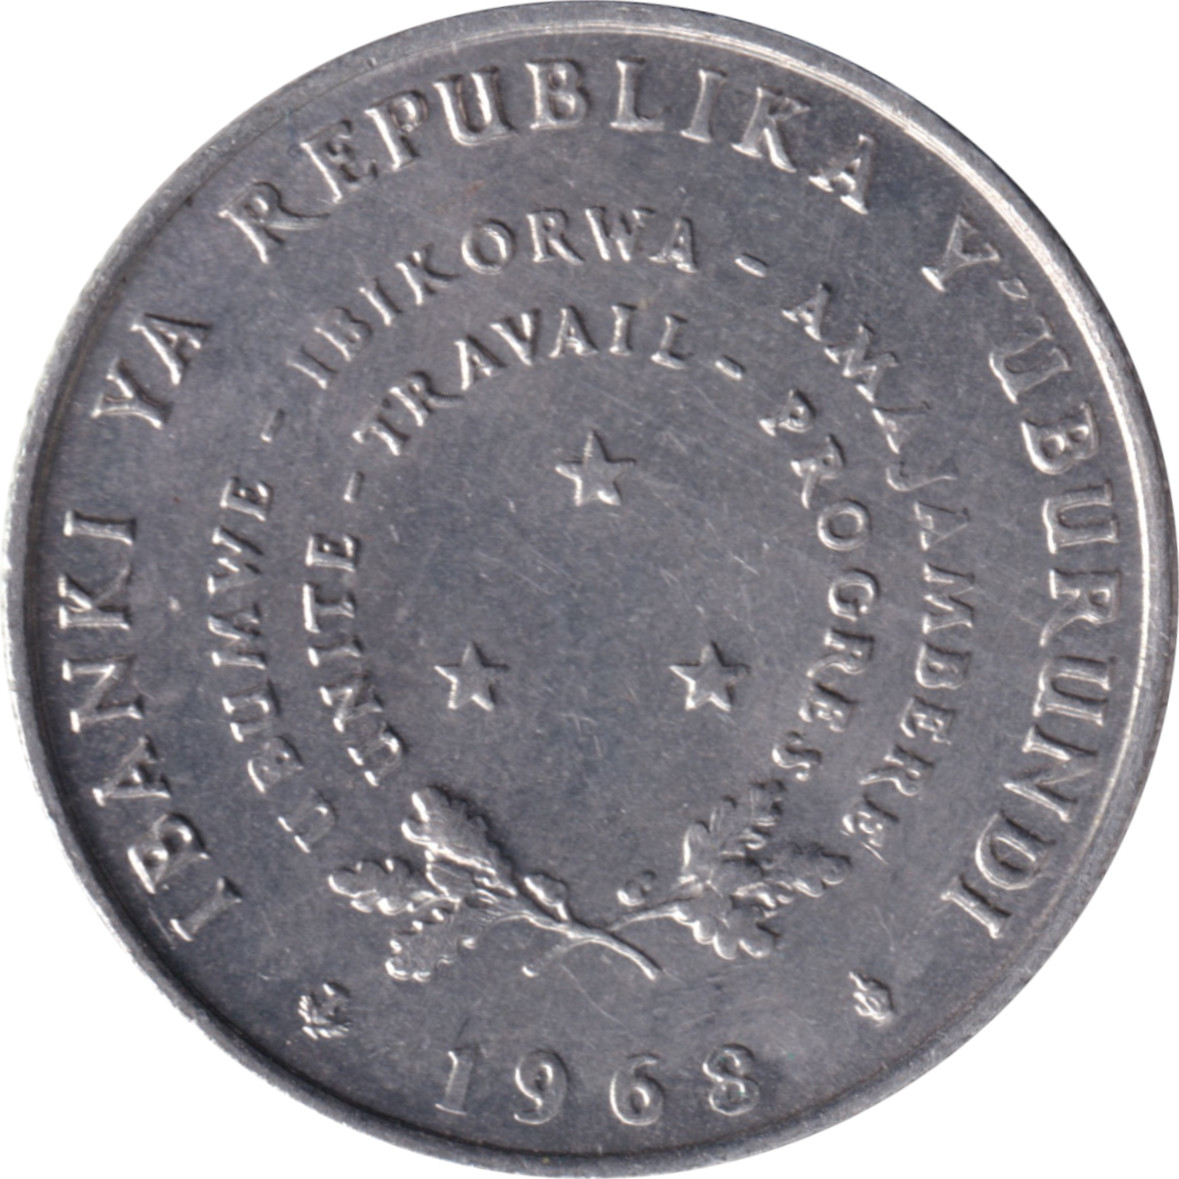 5 francs - Shield